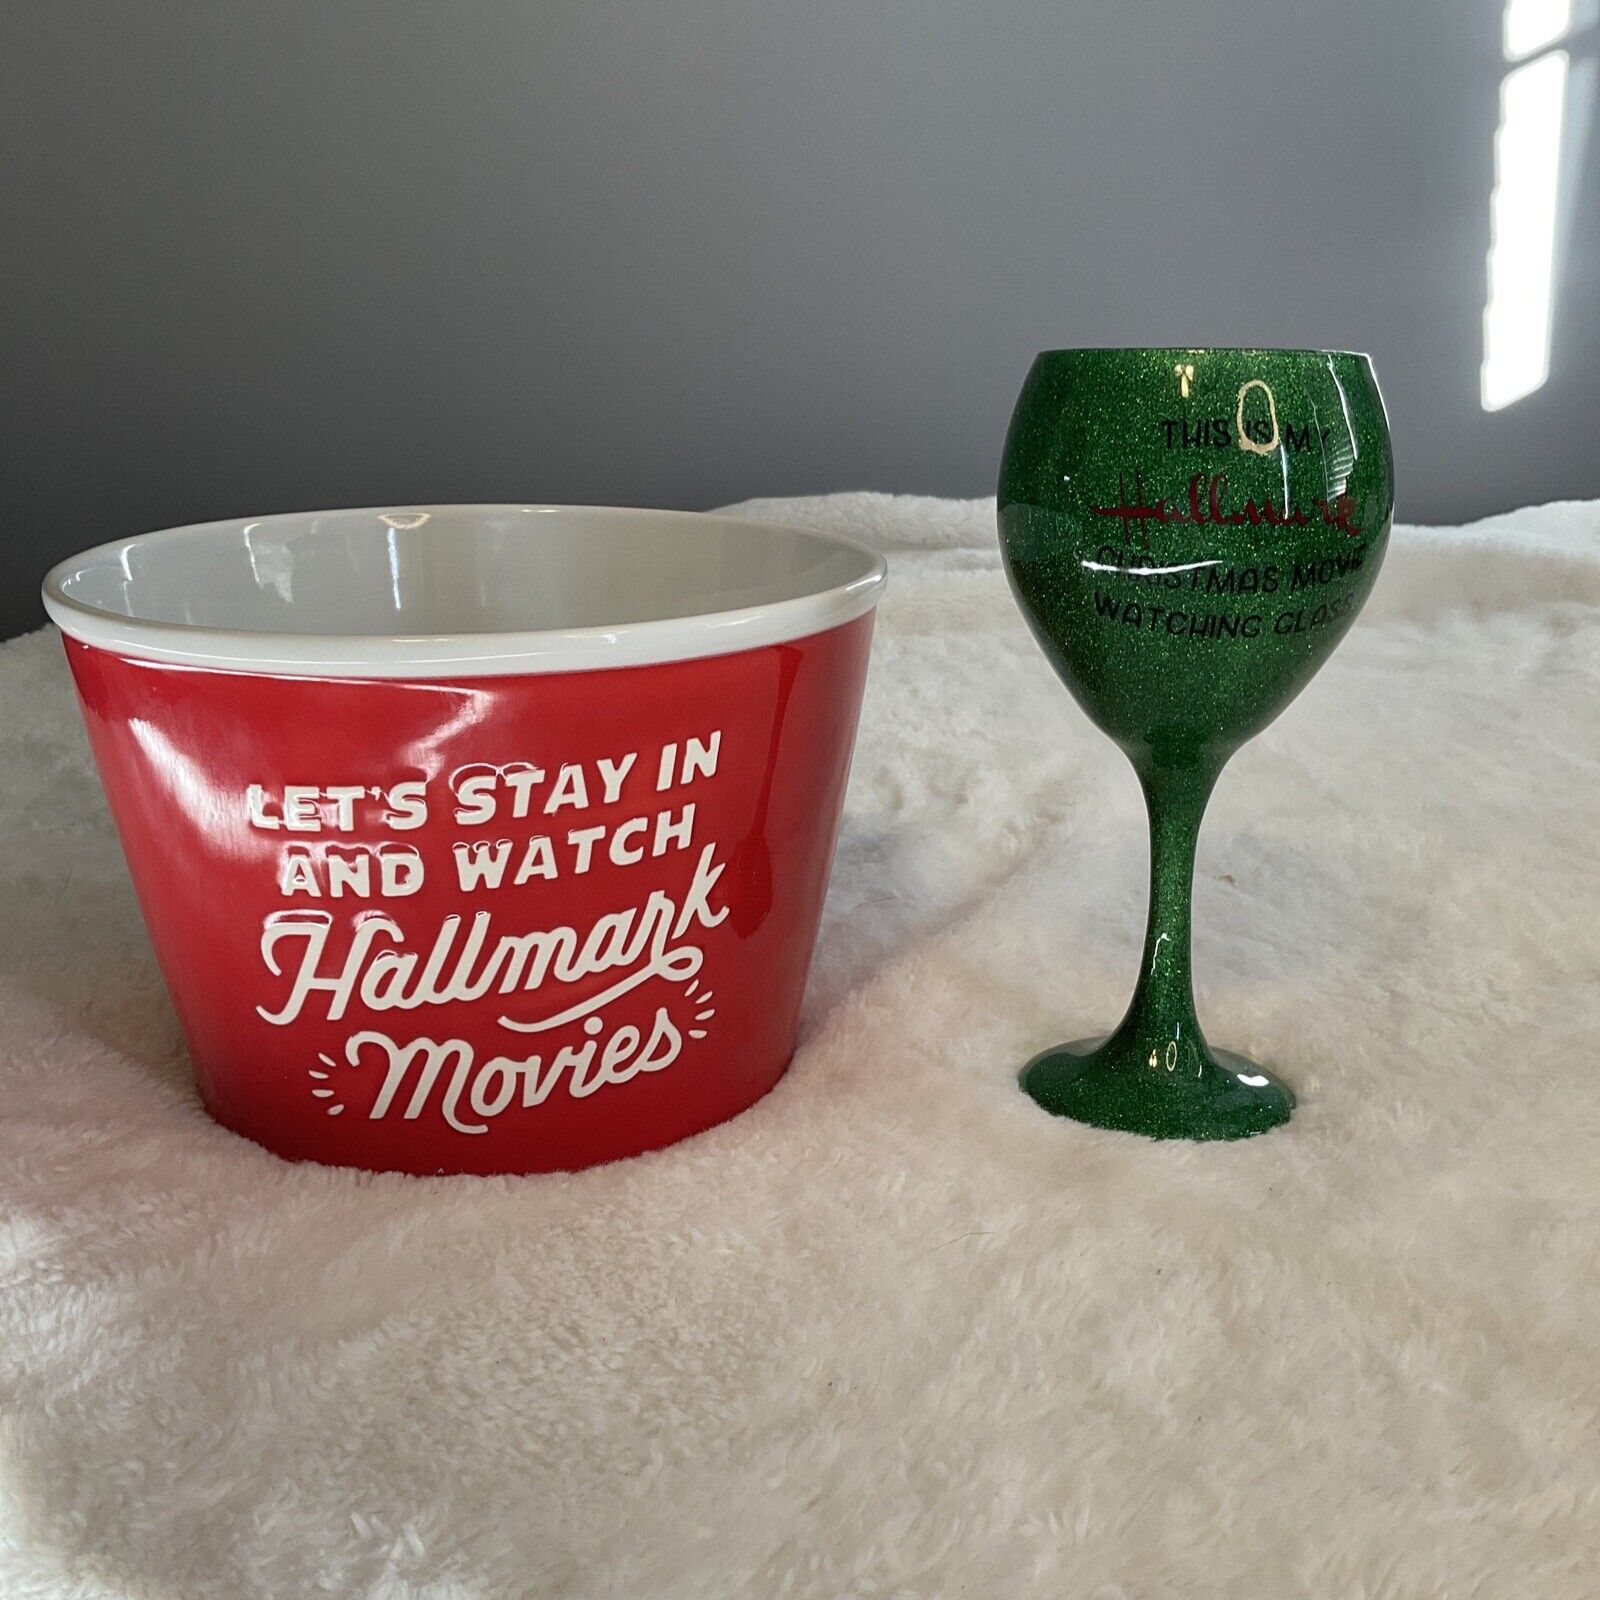 Hallmark “Let’s Stay In And Watch Hallmark Movies” Ceramic Popcorn Bucket&Glass